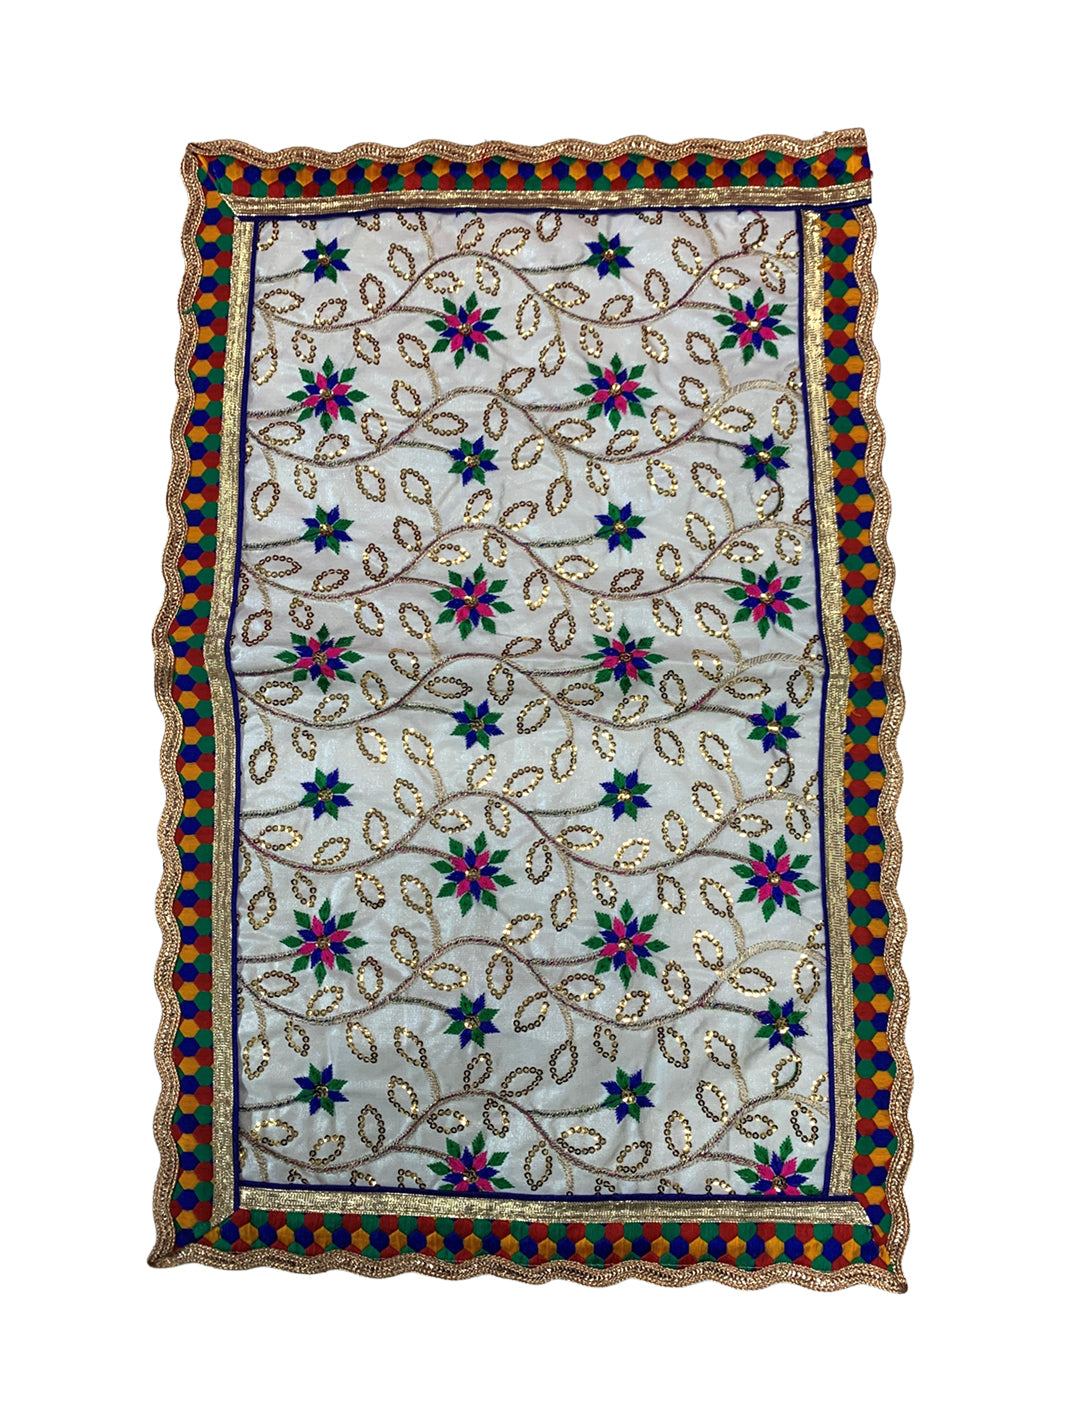 Embroidered Mata Chunri 34cm x 26cm - Roop Darshan